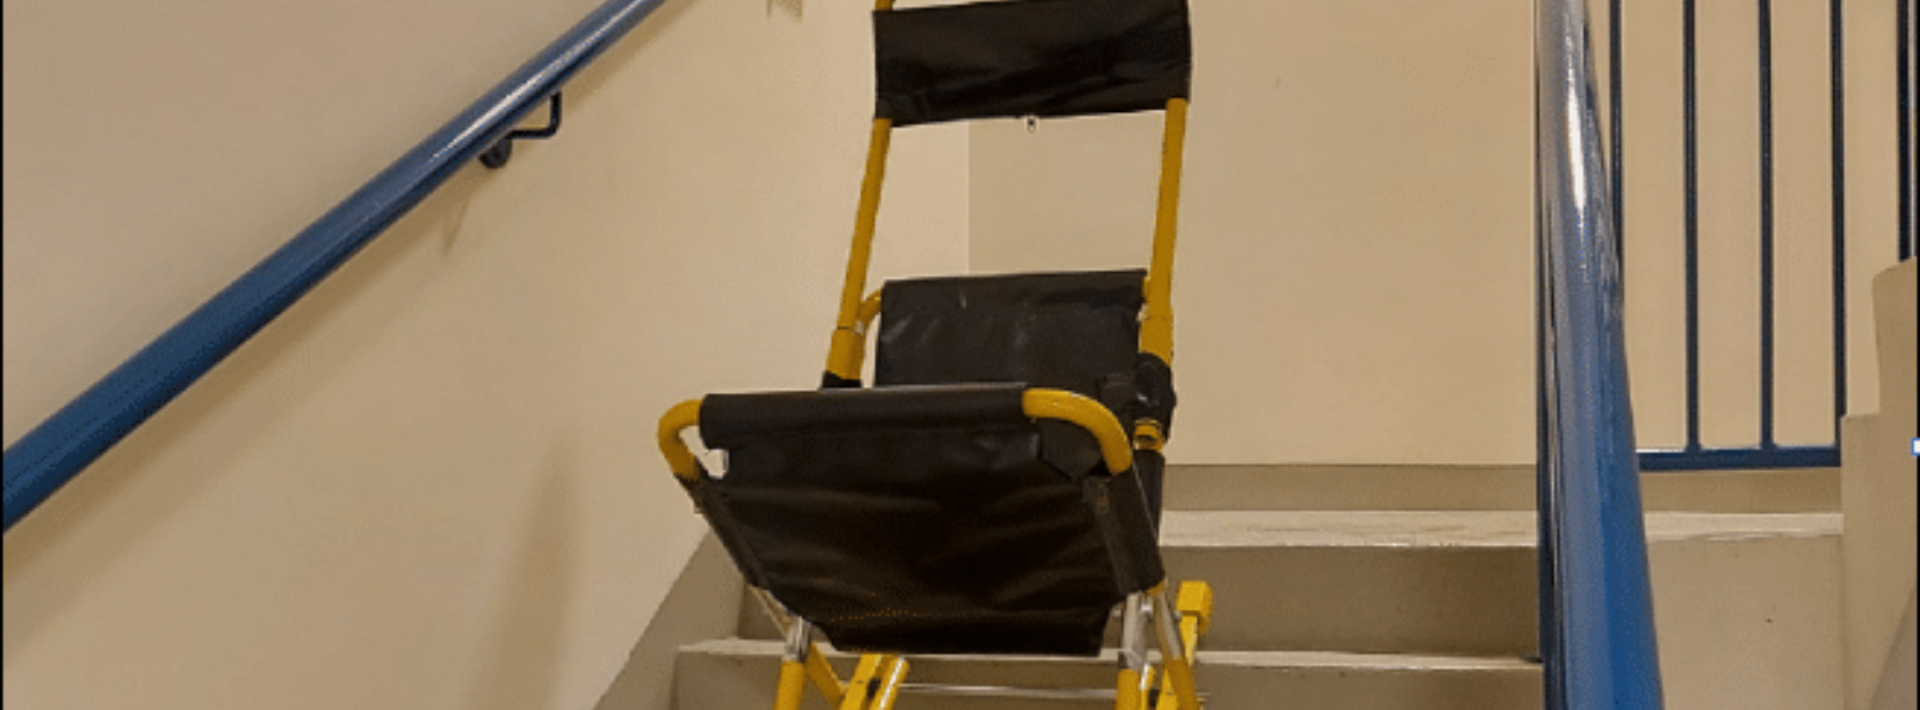 Evacuation chairs for emergencies